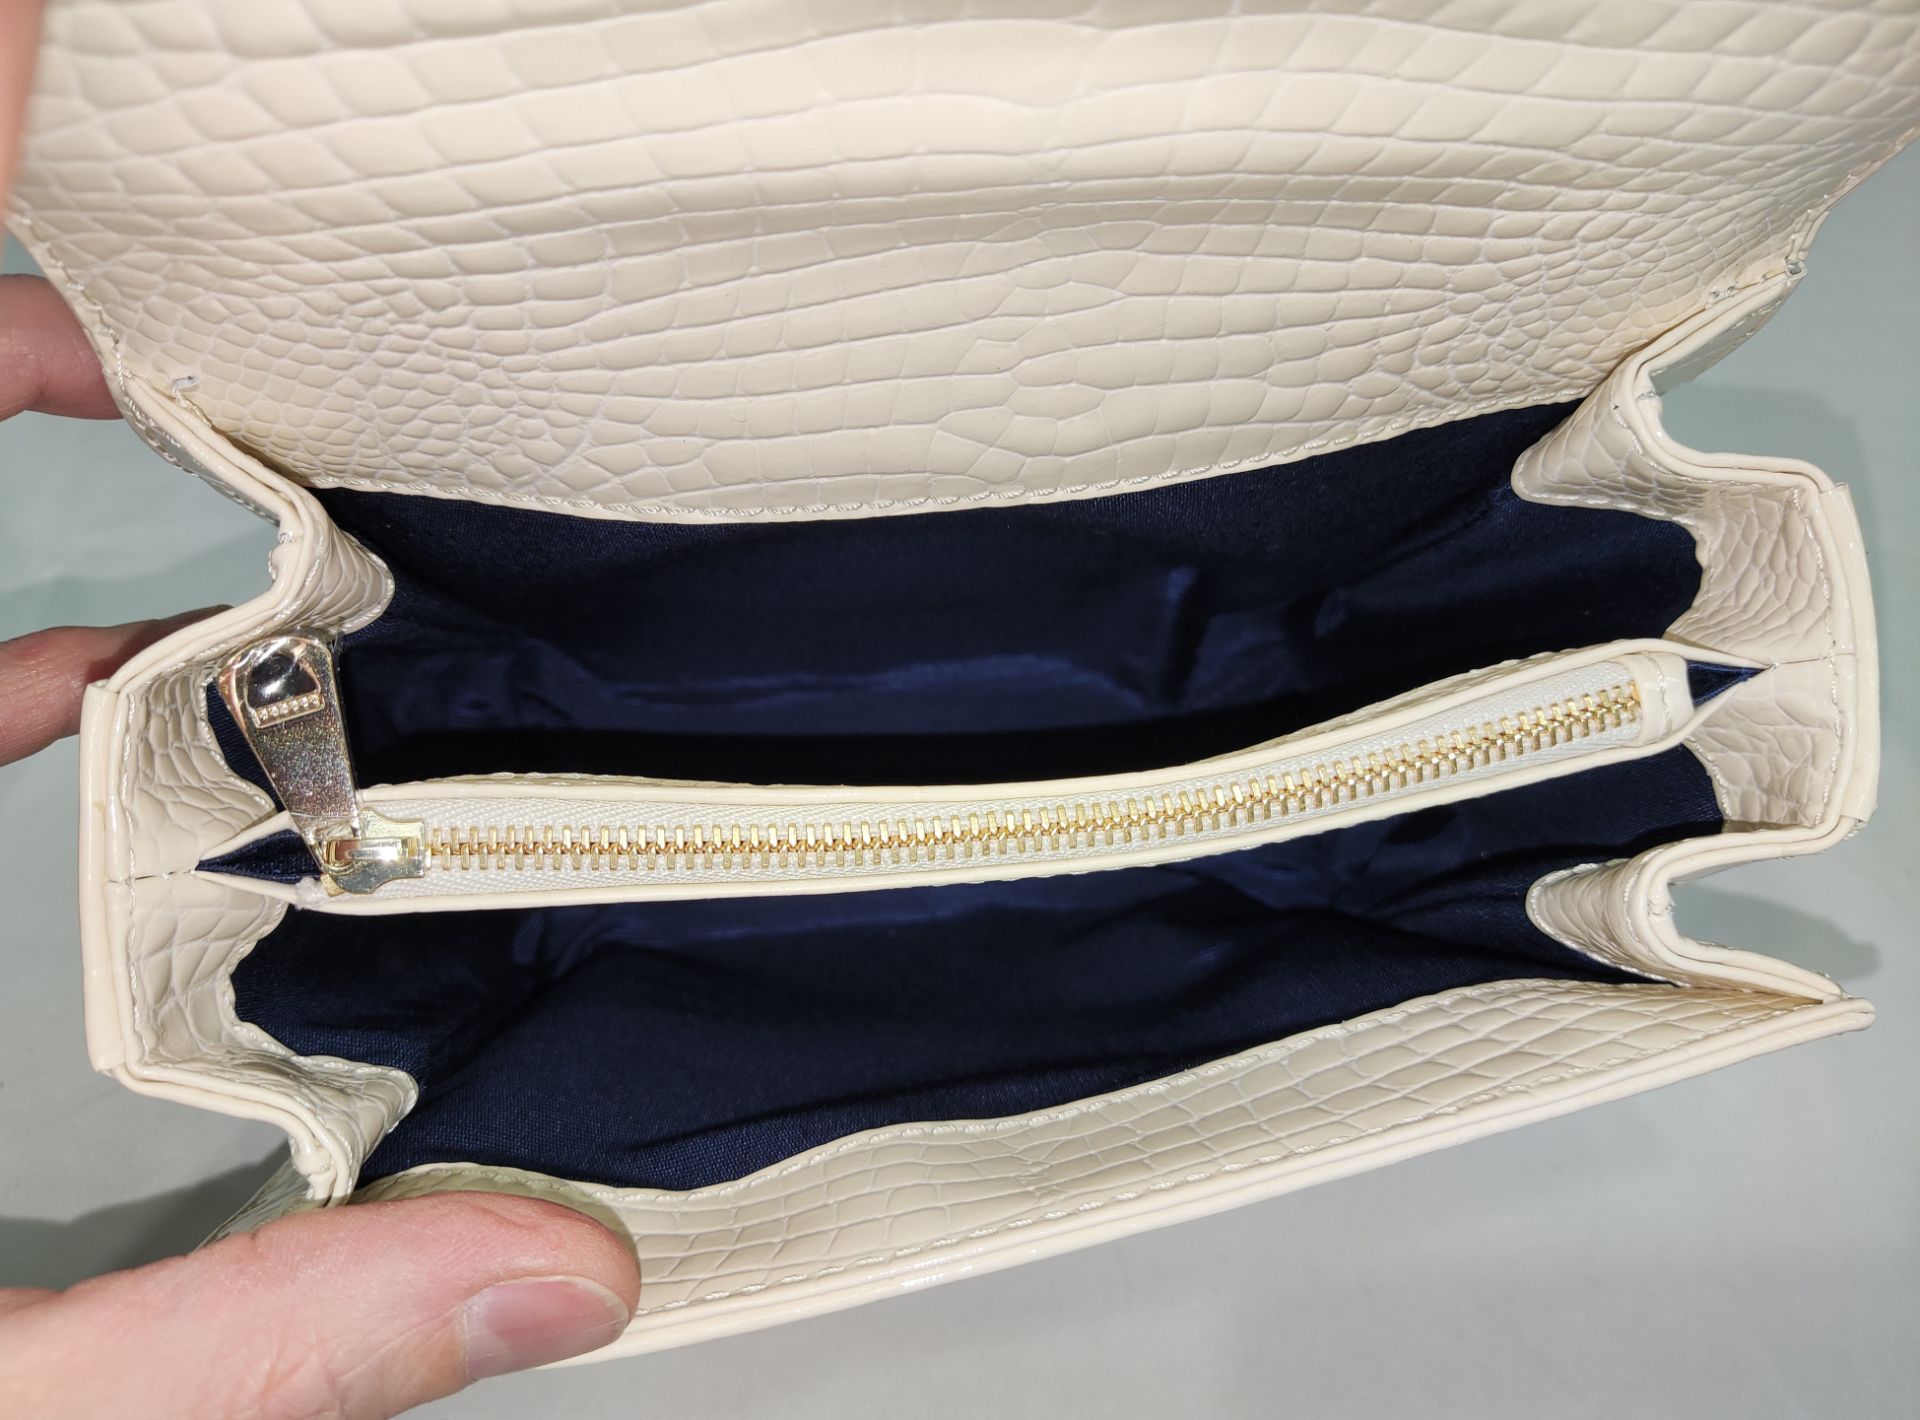 1 x ASPINAL OF LONDON Mayfair Midi Bag In Soft Taupe Patent Croc - Original RRP £595 - Ref: - Image 8 of 24